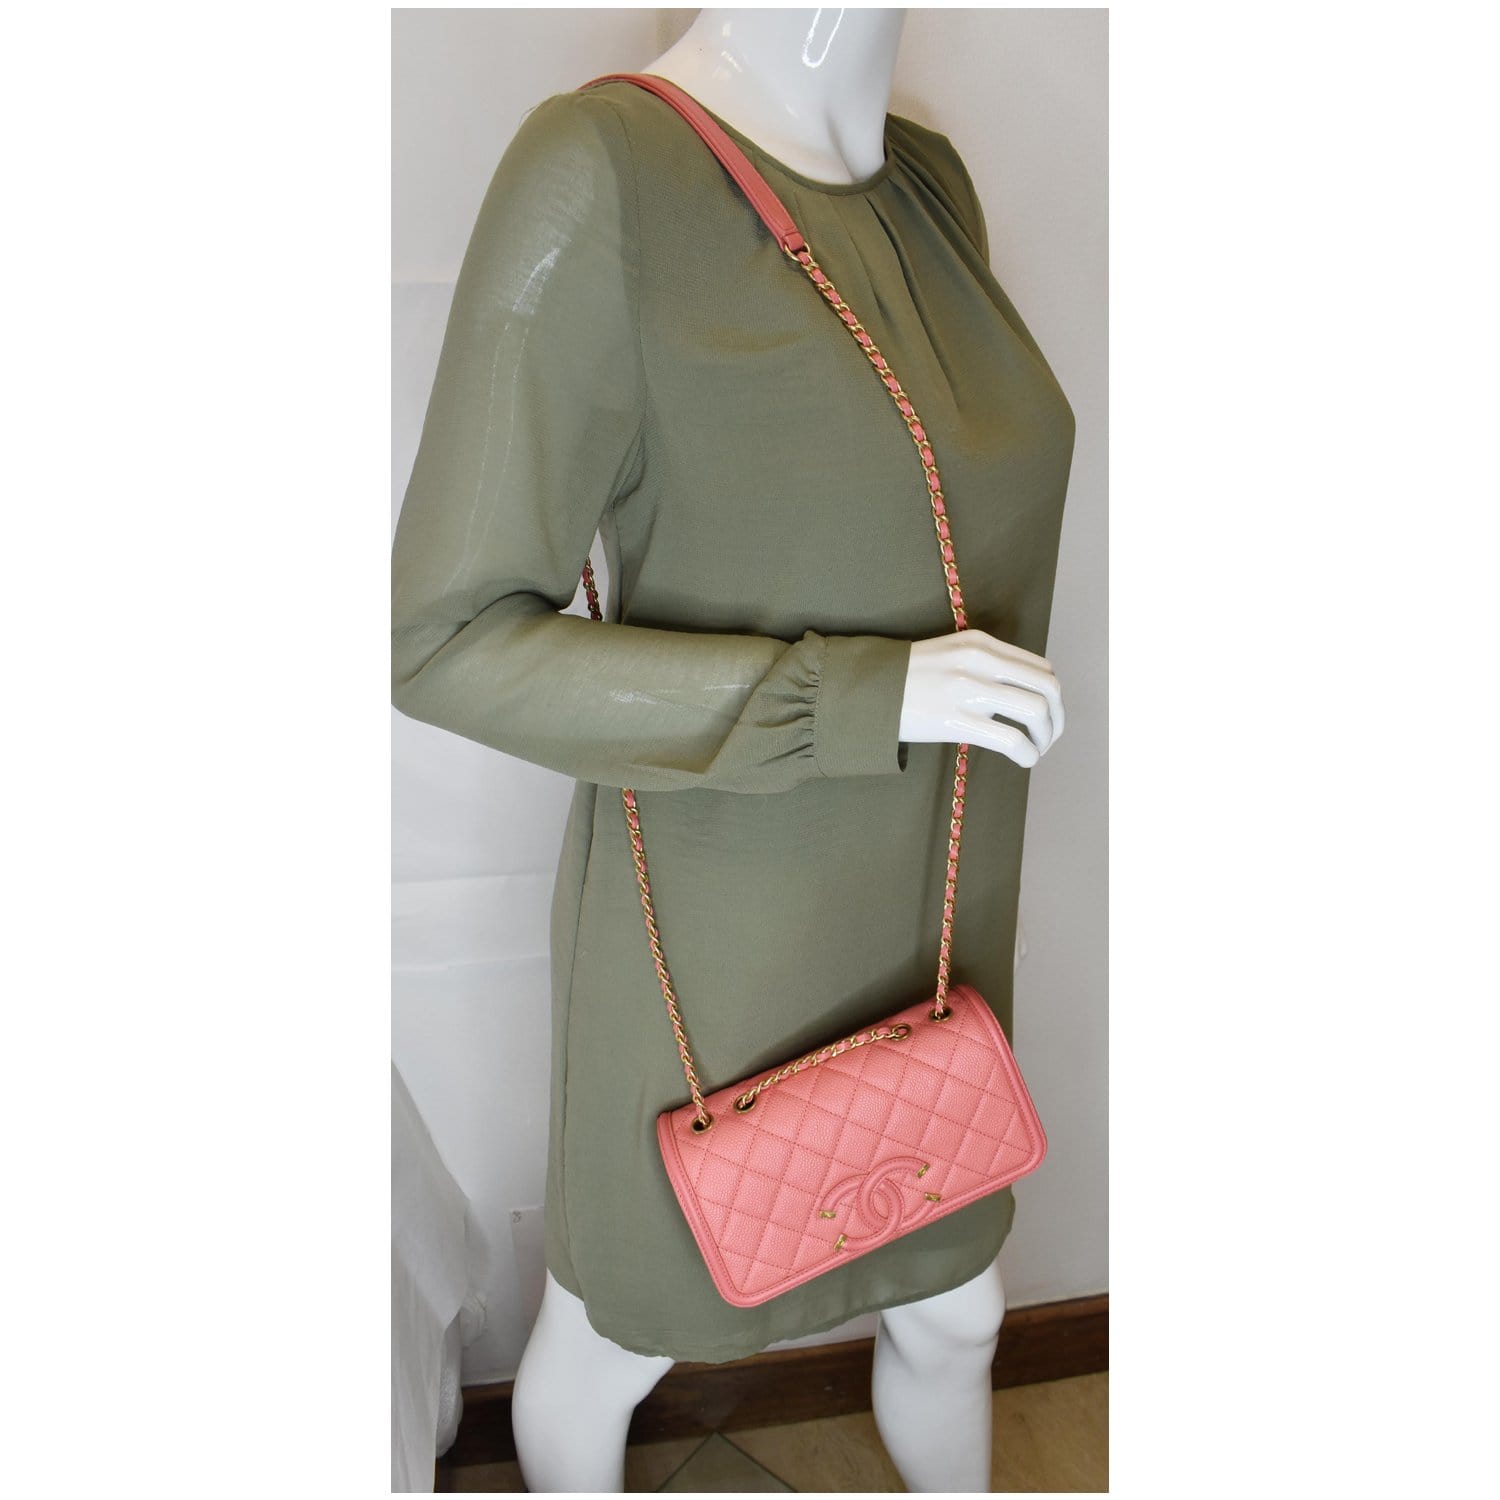 Chanel CC Crave Flap Bag - Brown Shoulder Bags, Handbags